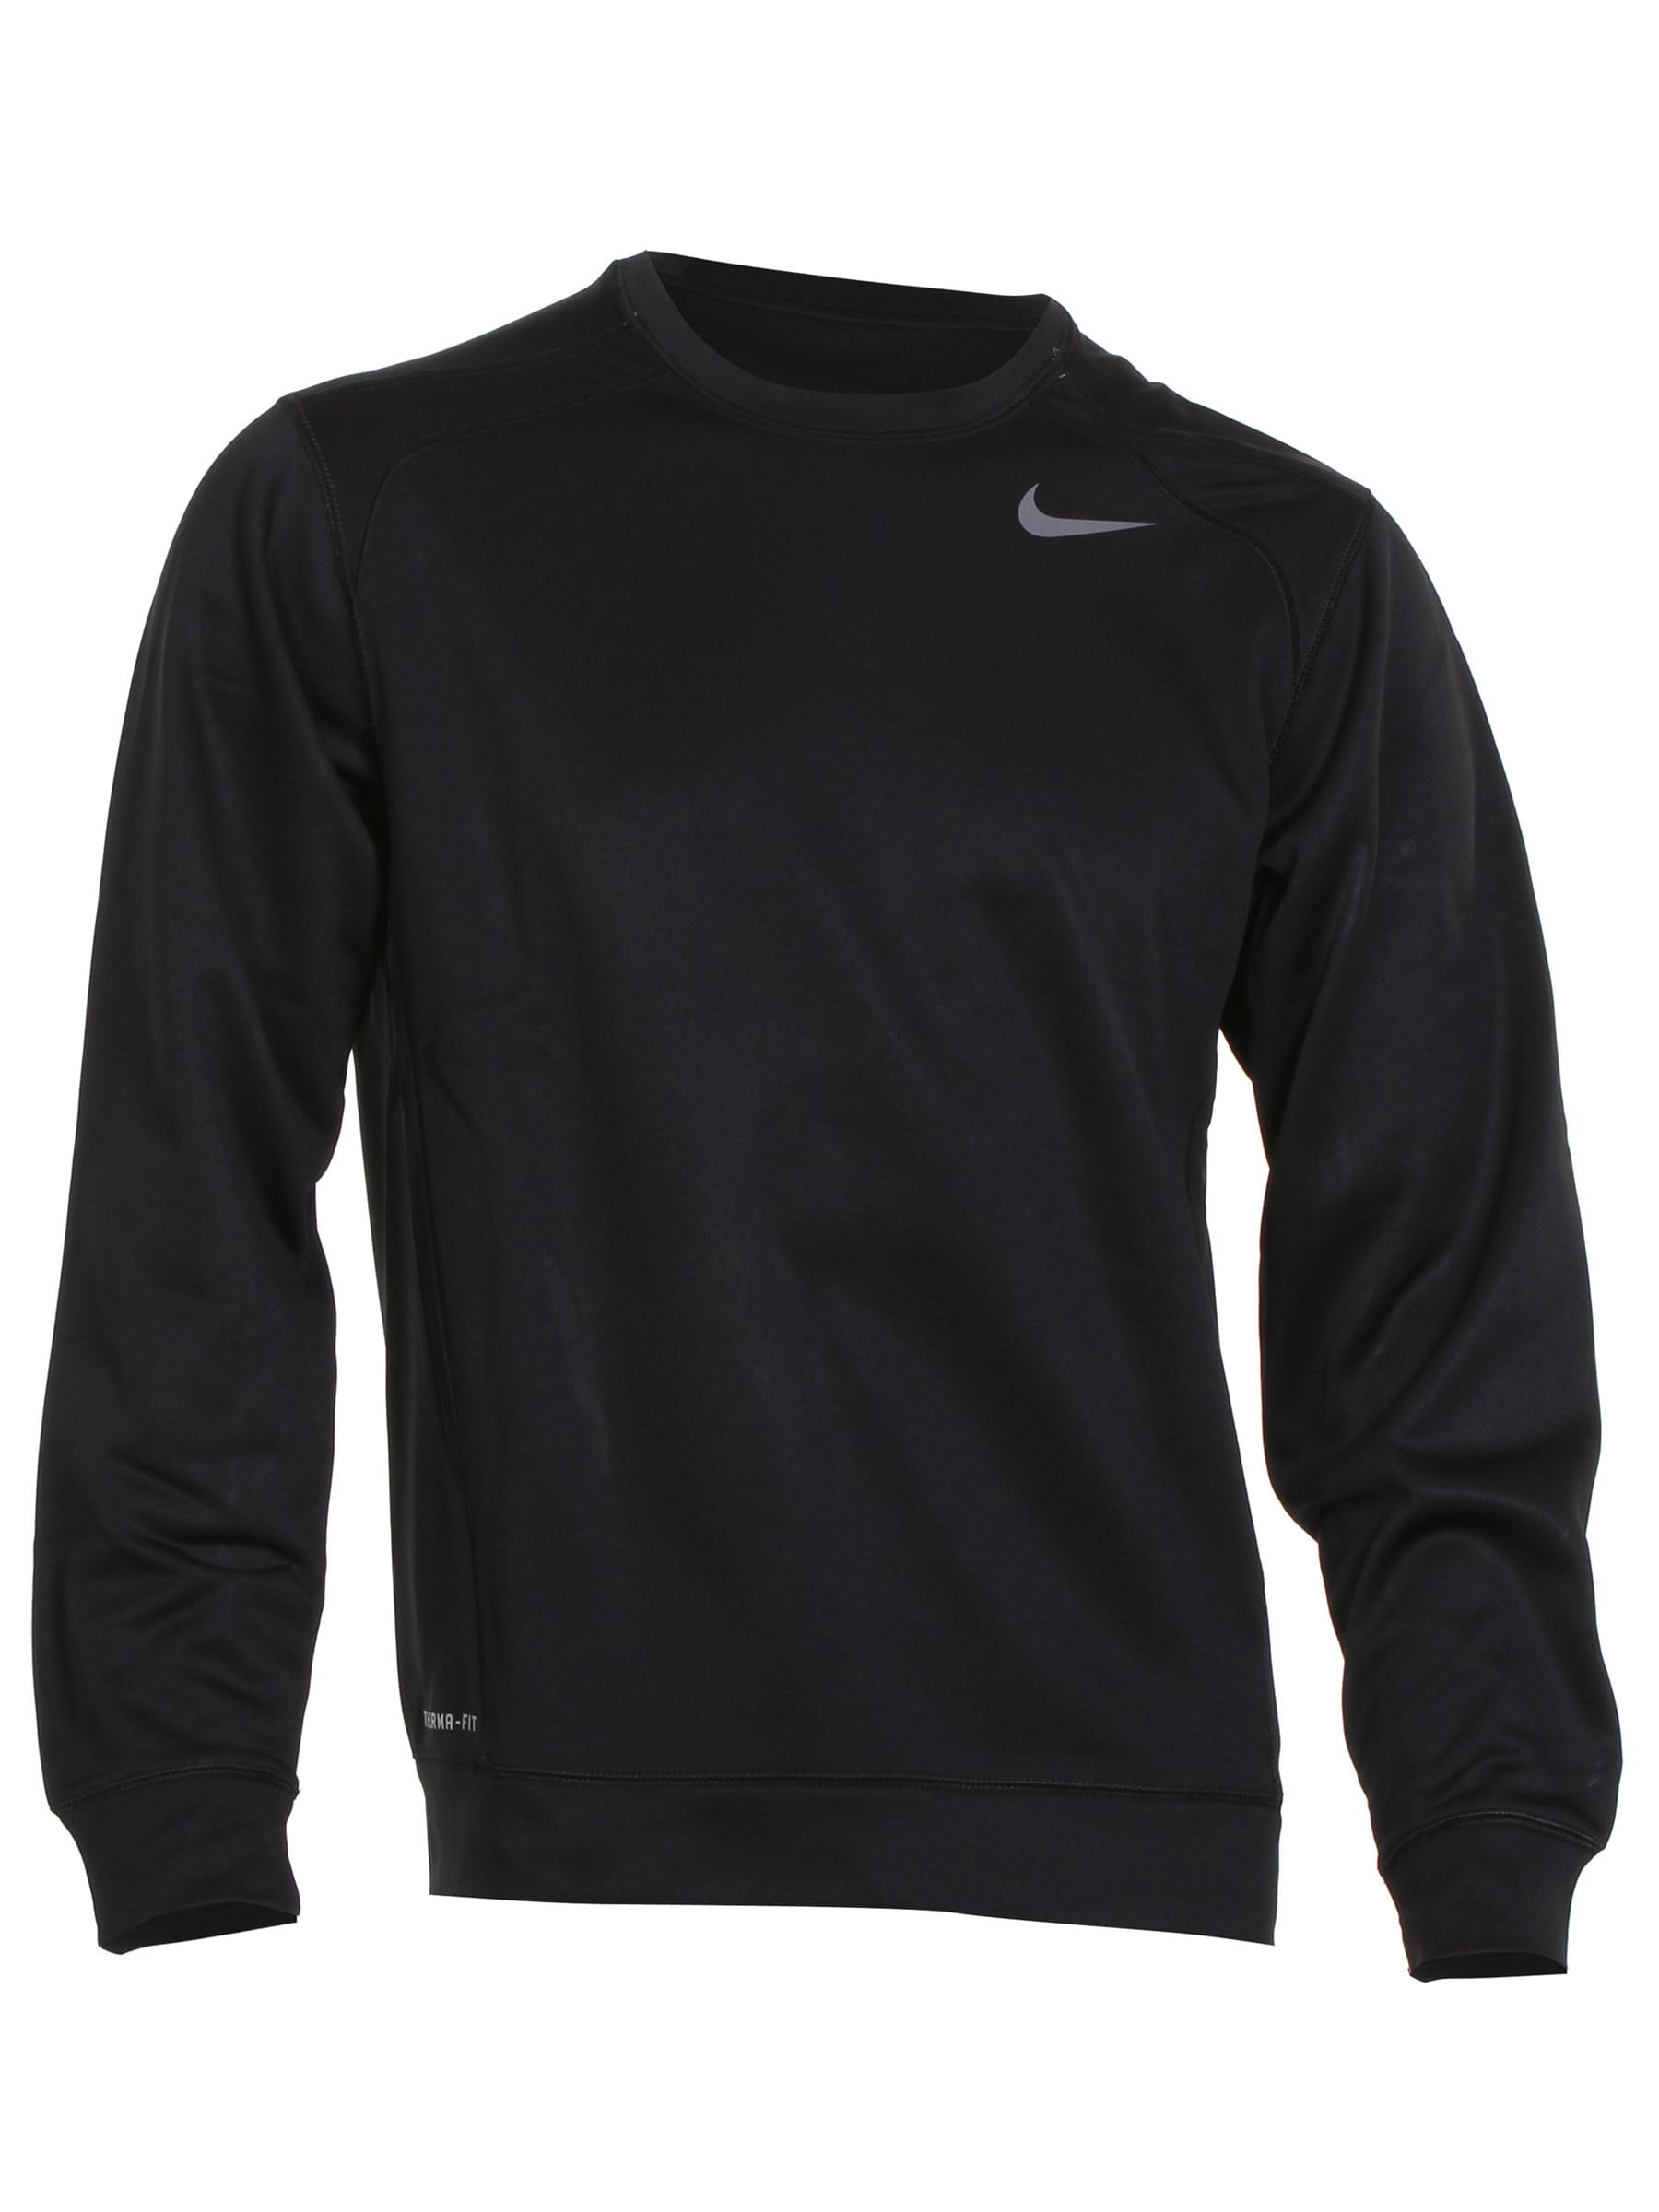 Nike Men Black Sweatshirt